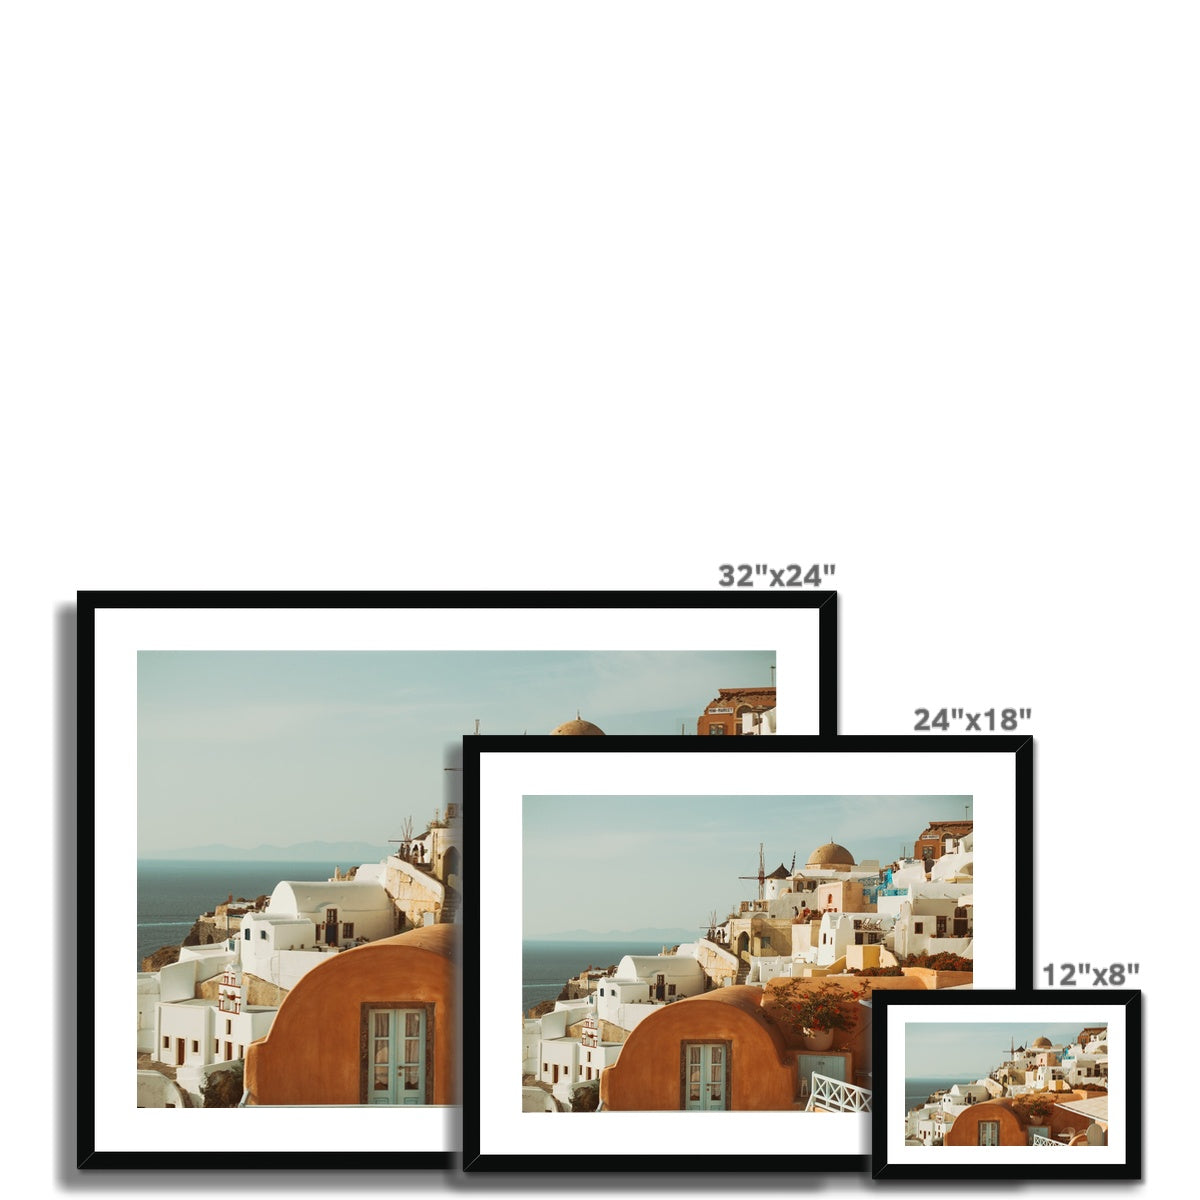 Santorini Architecture Framed & Mounted Print